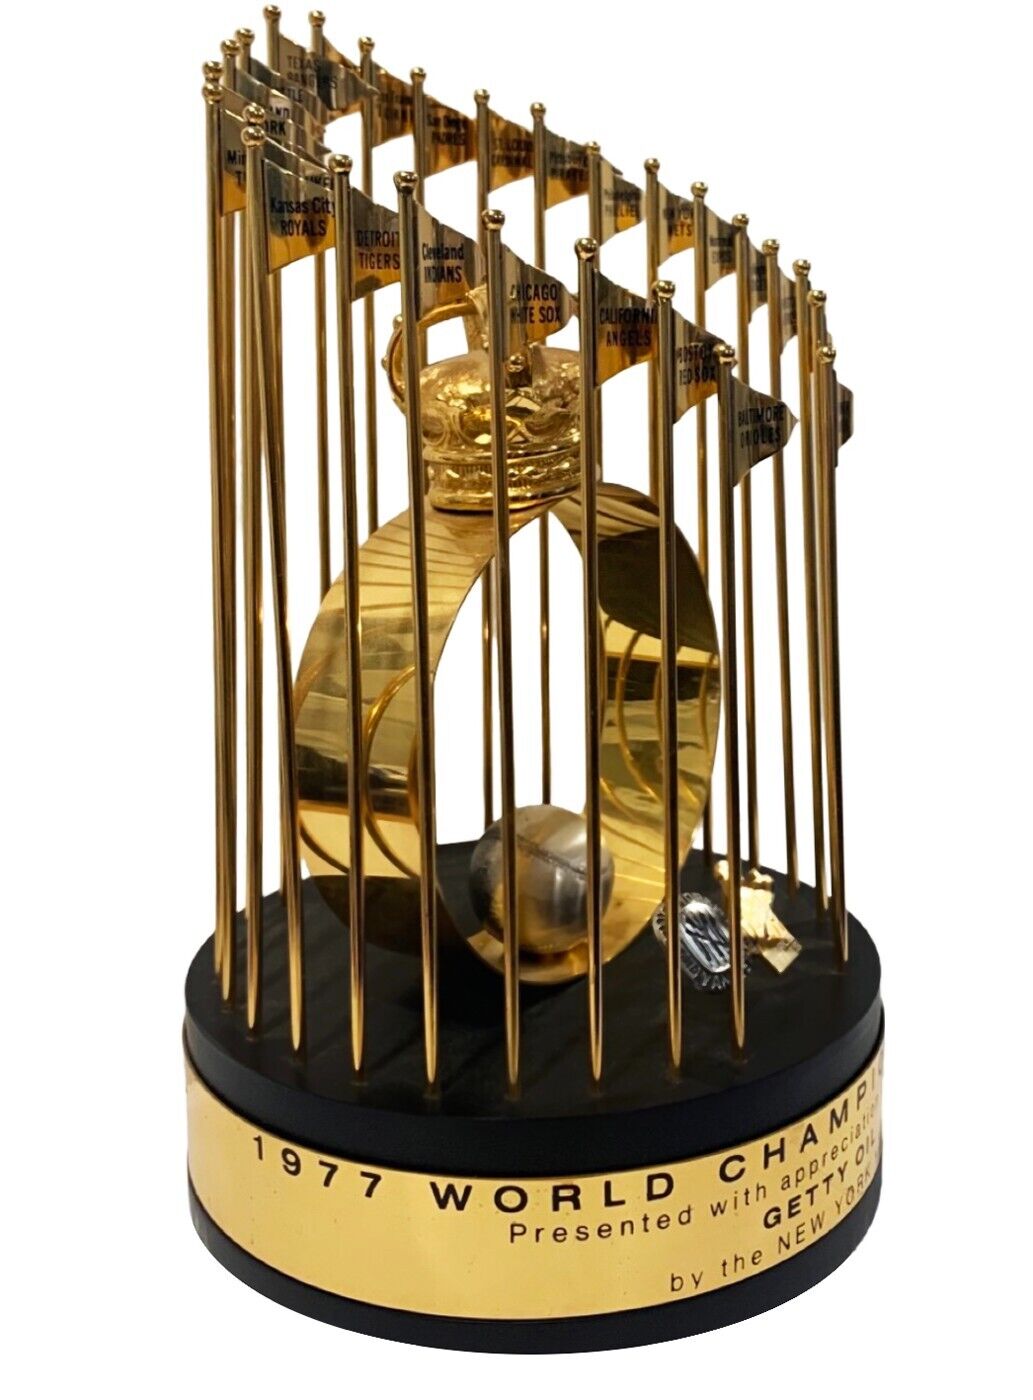 Original 1977 New York Yankees World Series Championship Trophy, 12 inch Balfour